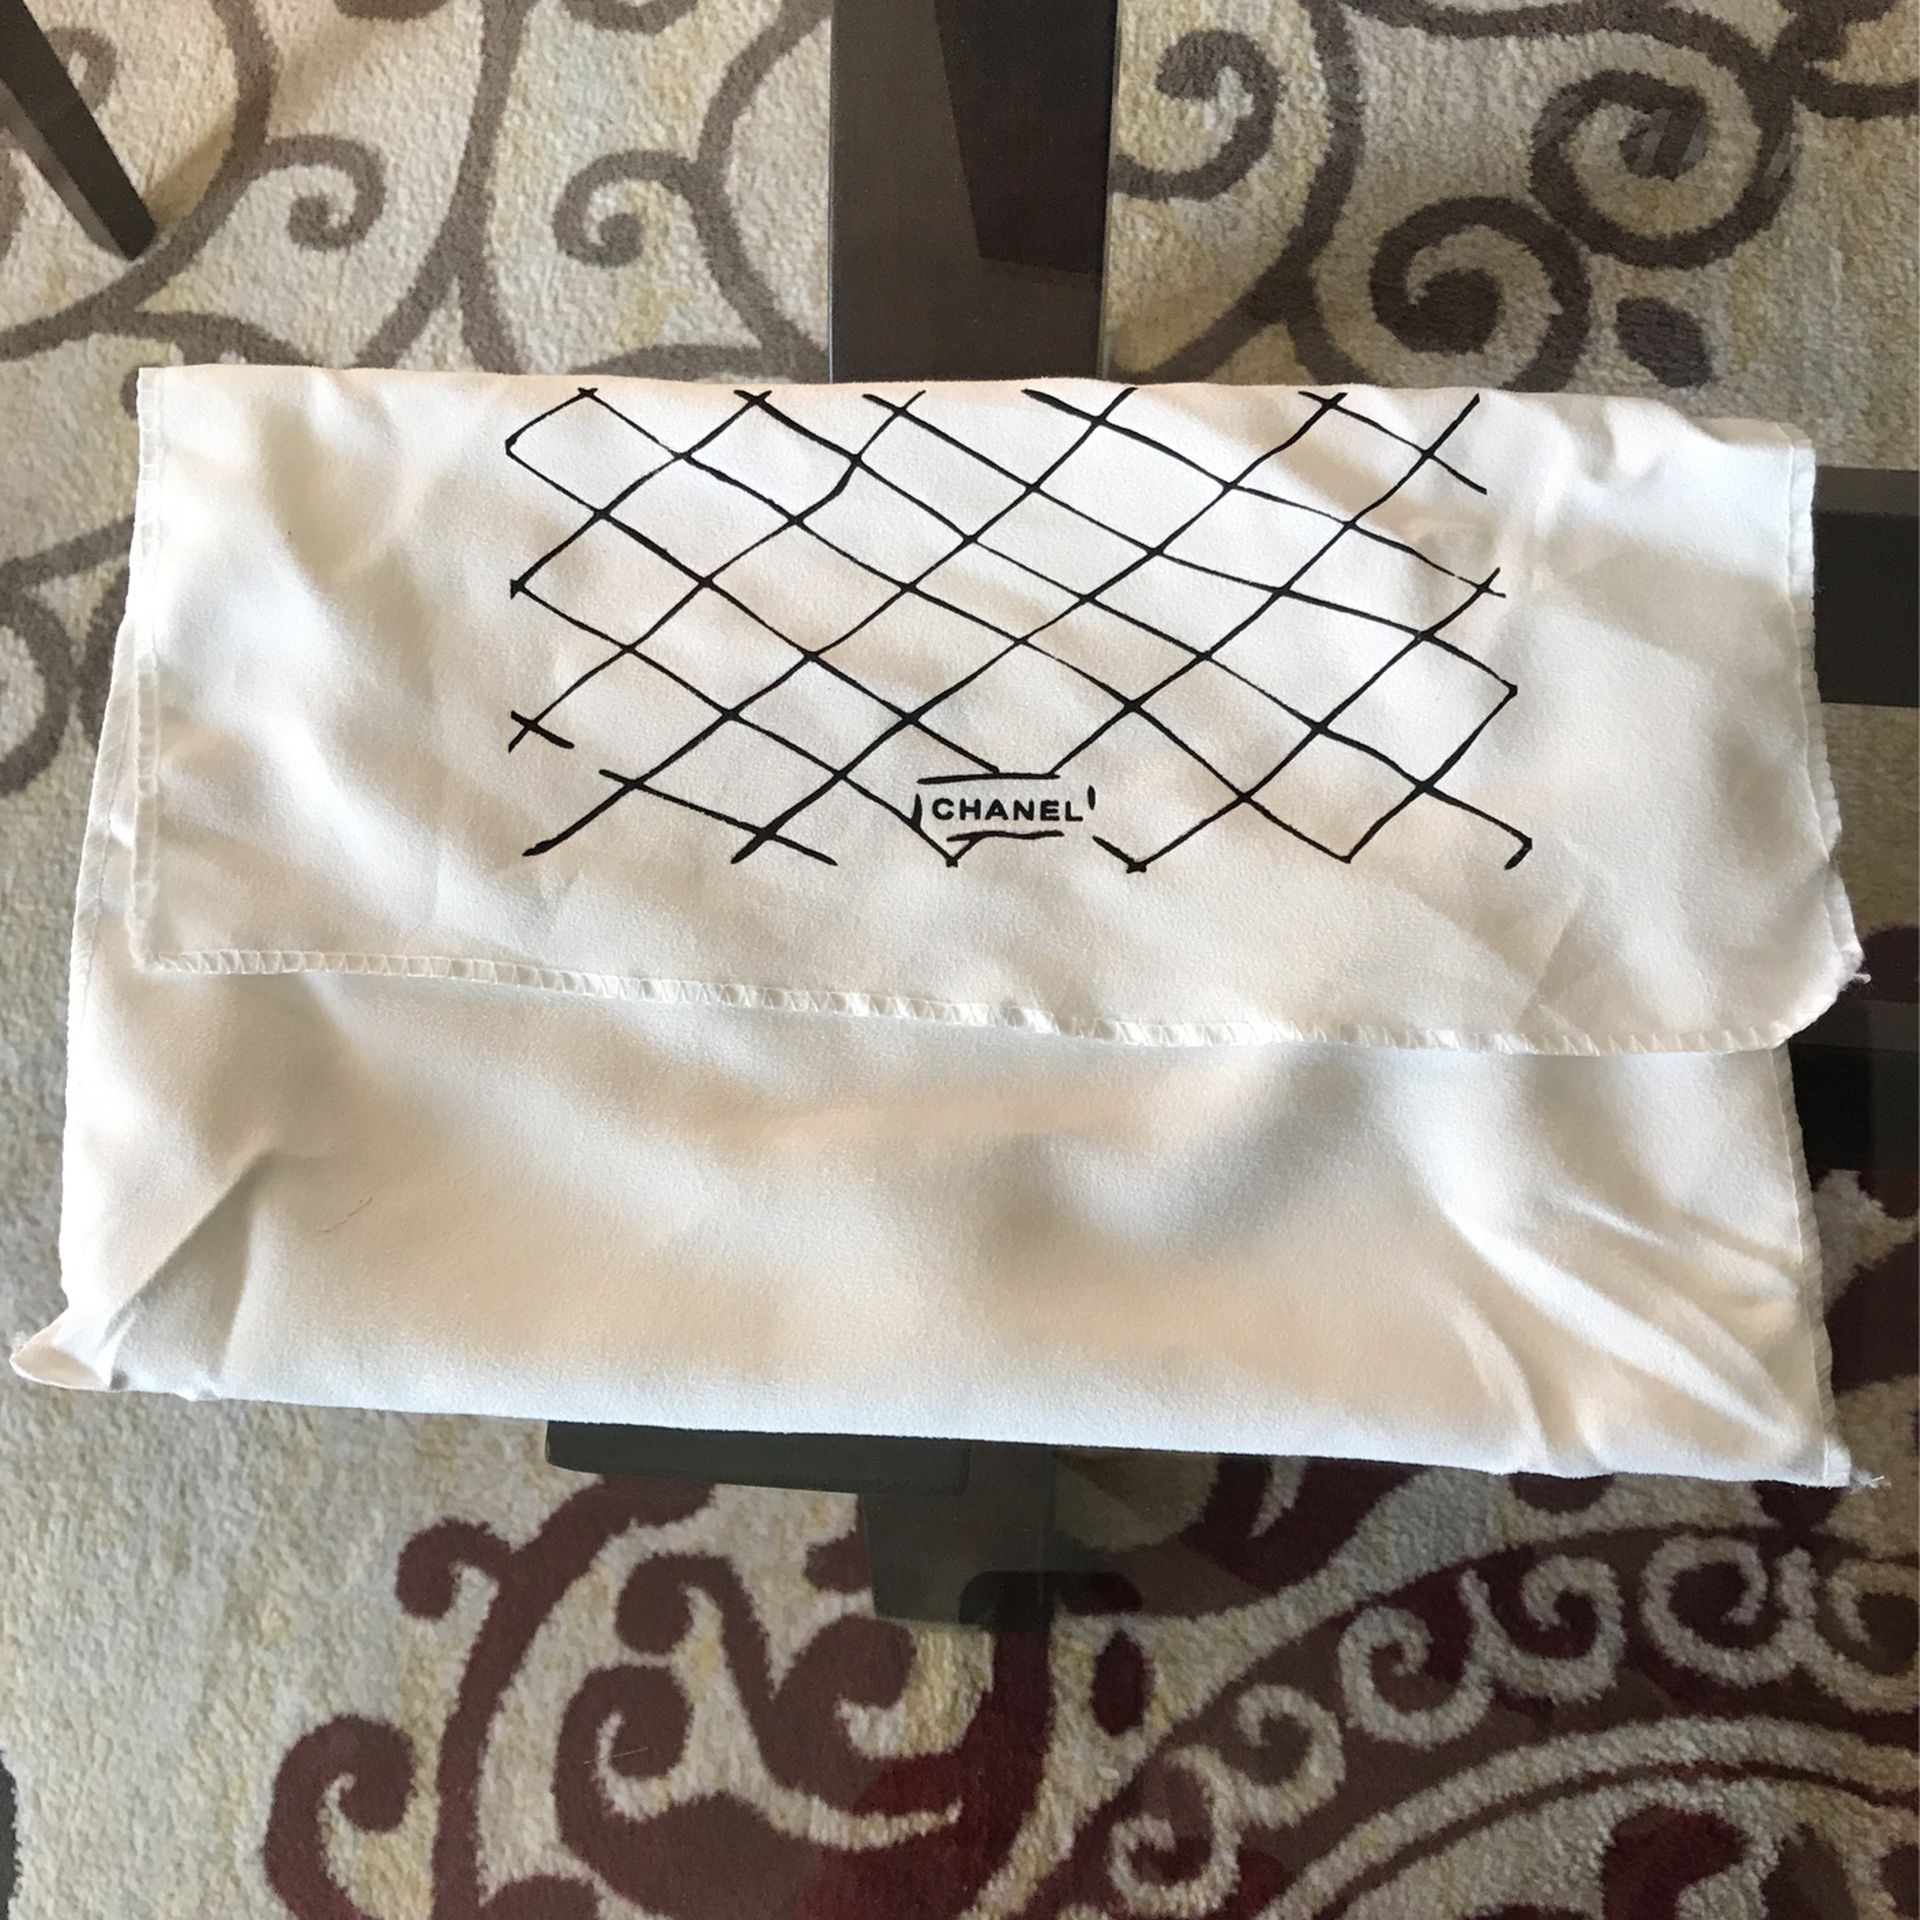 Chanel Beauty Bucket Bag Gift for Sale in Weehawken, New Jersey - OfferUp